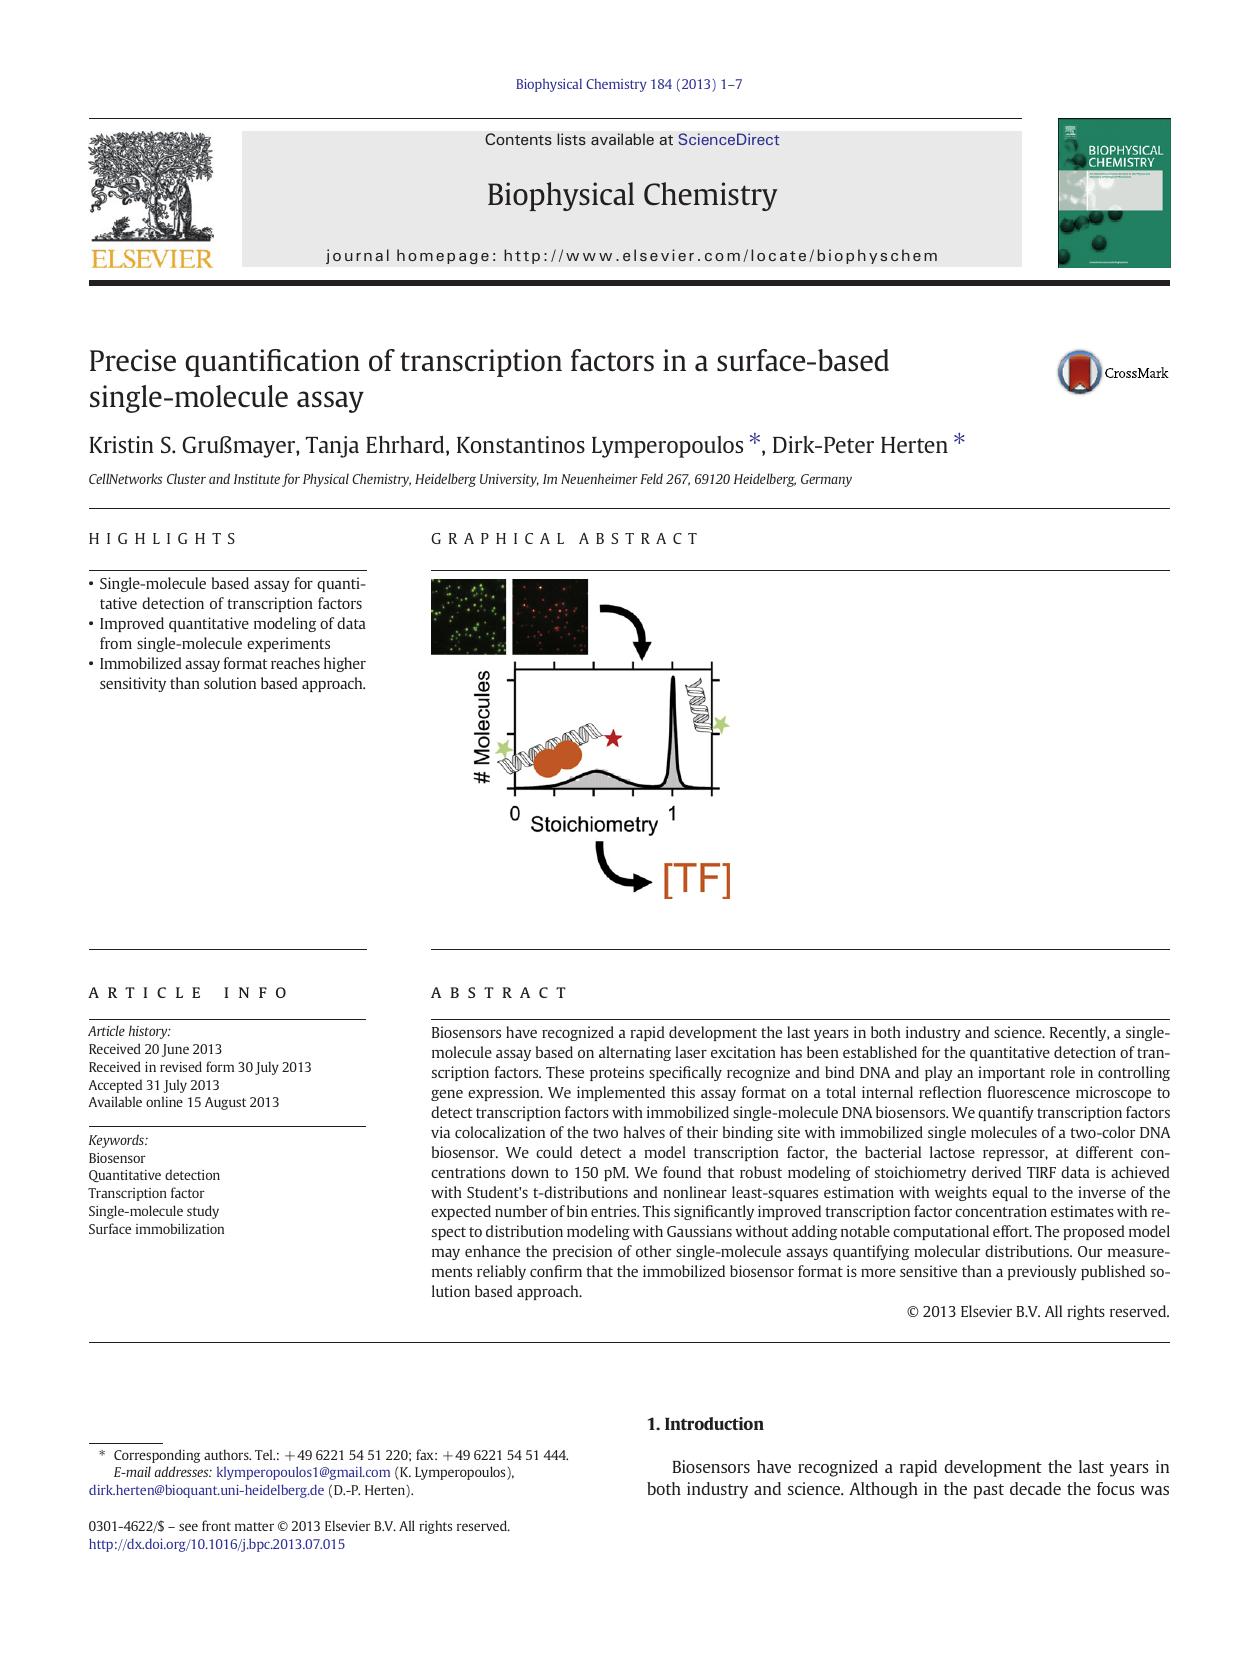 Precise quantification of transcription factors in a surface-based single-molecule assay by Kristin S. Grußmayer & Tanja Ehrhard & Konstantinos Lymperopoulos & Dirk-Peter Herten